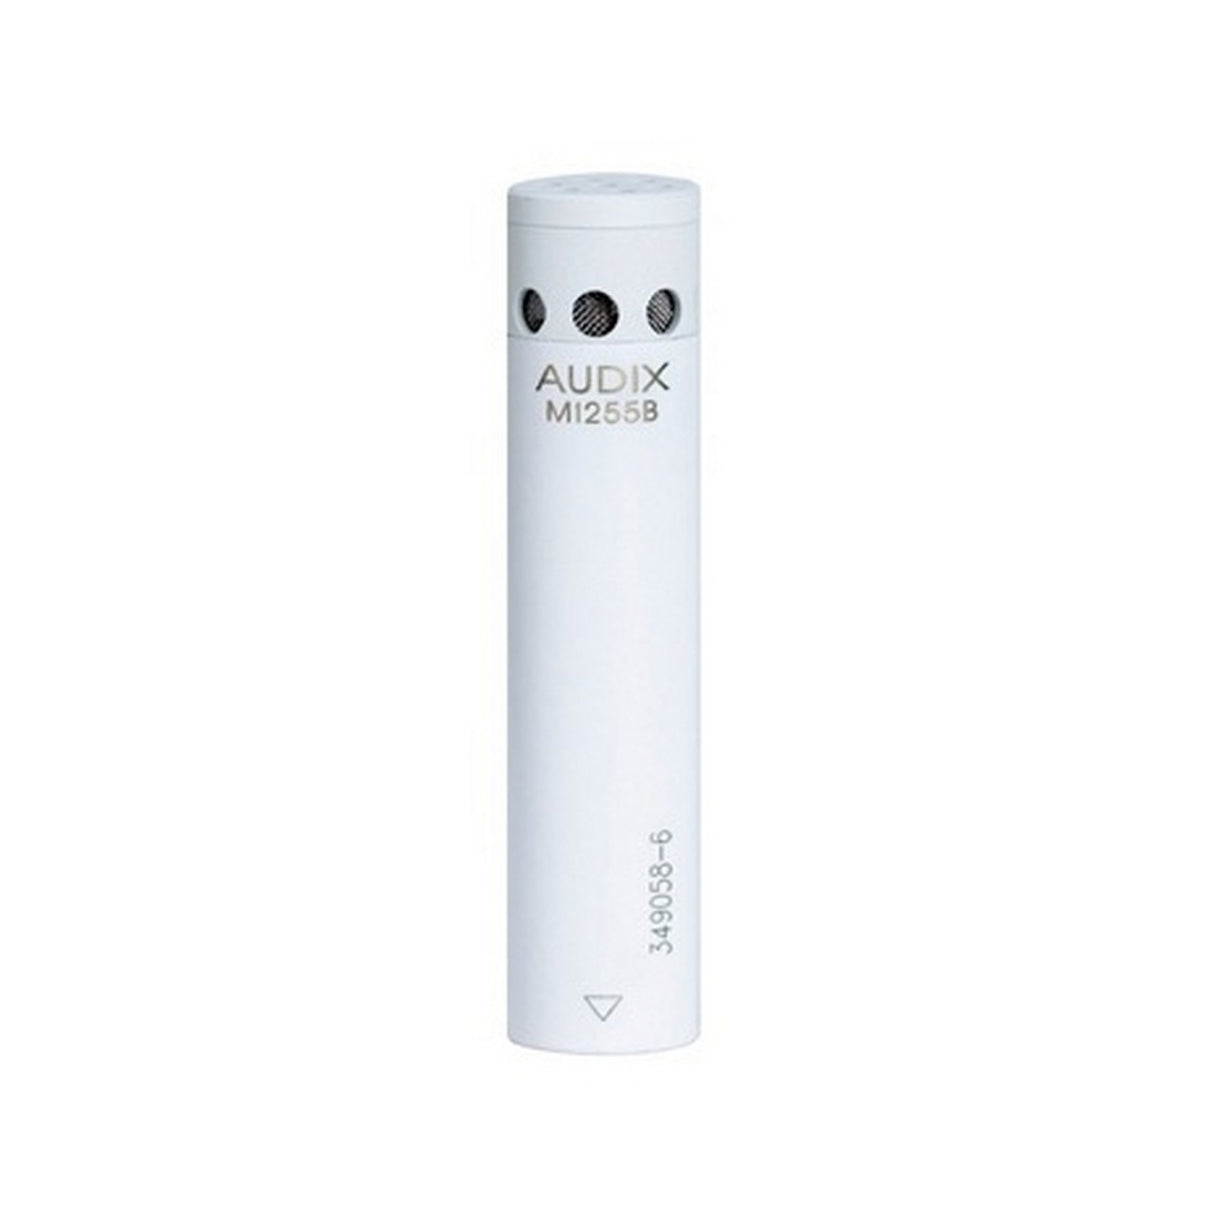 Audix M1255BWS Miniaturized Condenser Microphone, White, Supercardioid